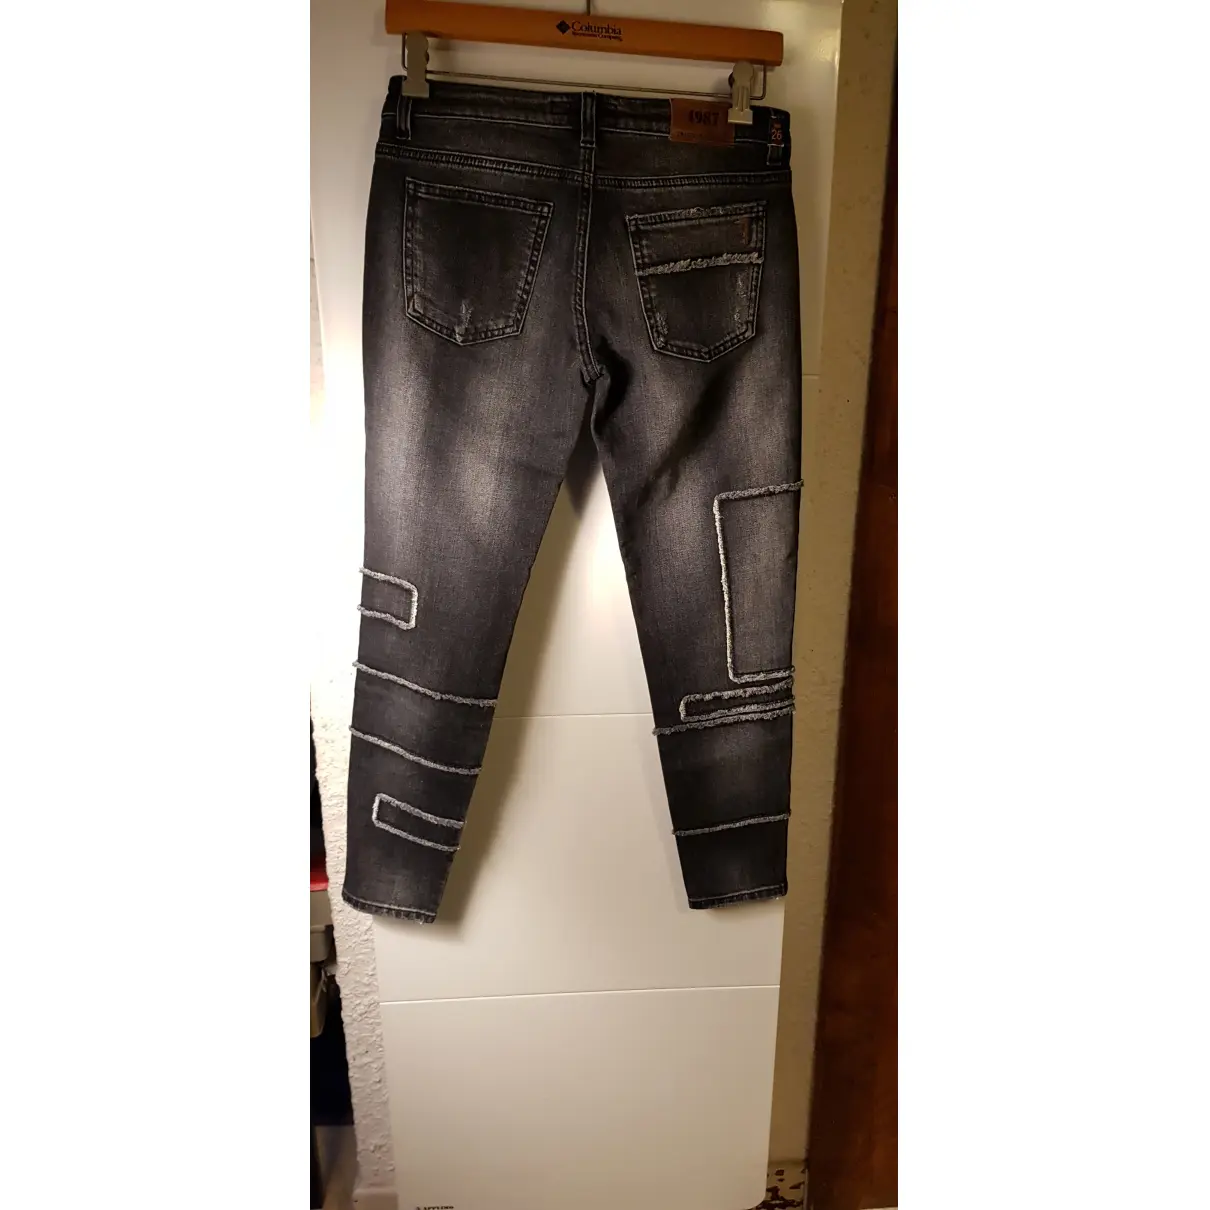 Buy Trussardi Jeans Slim jeans online